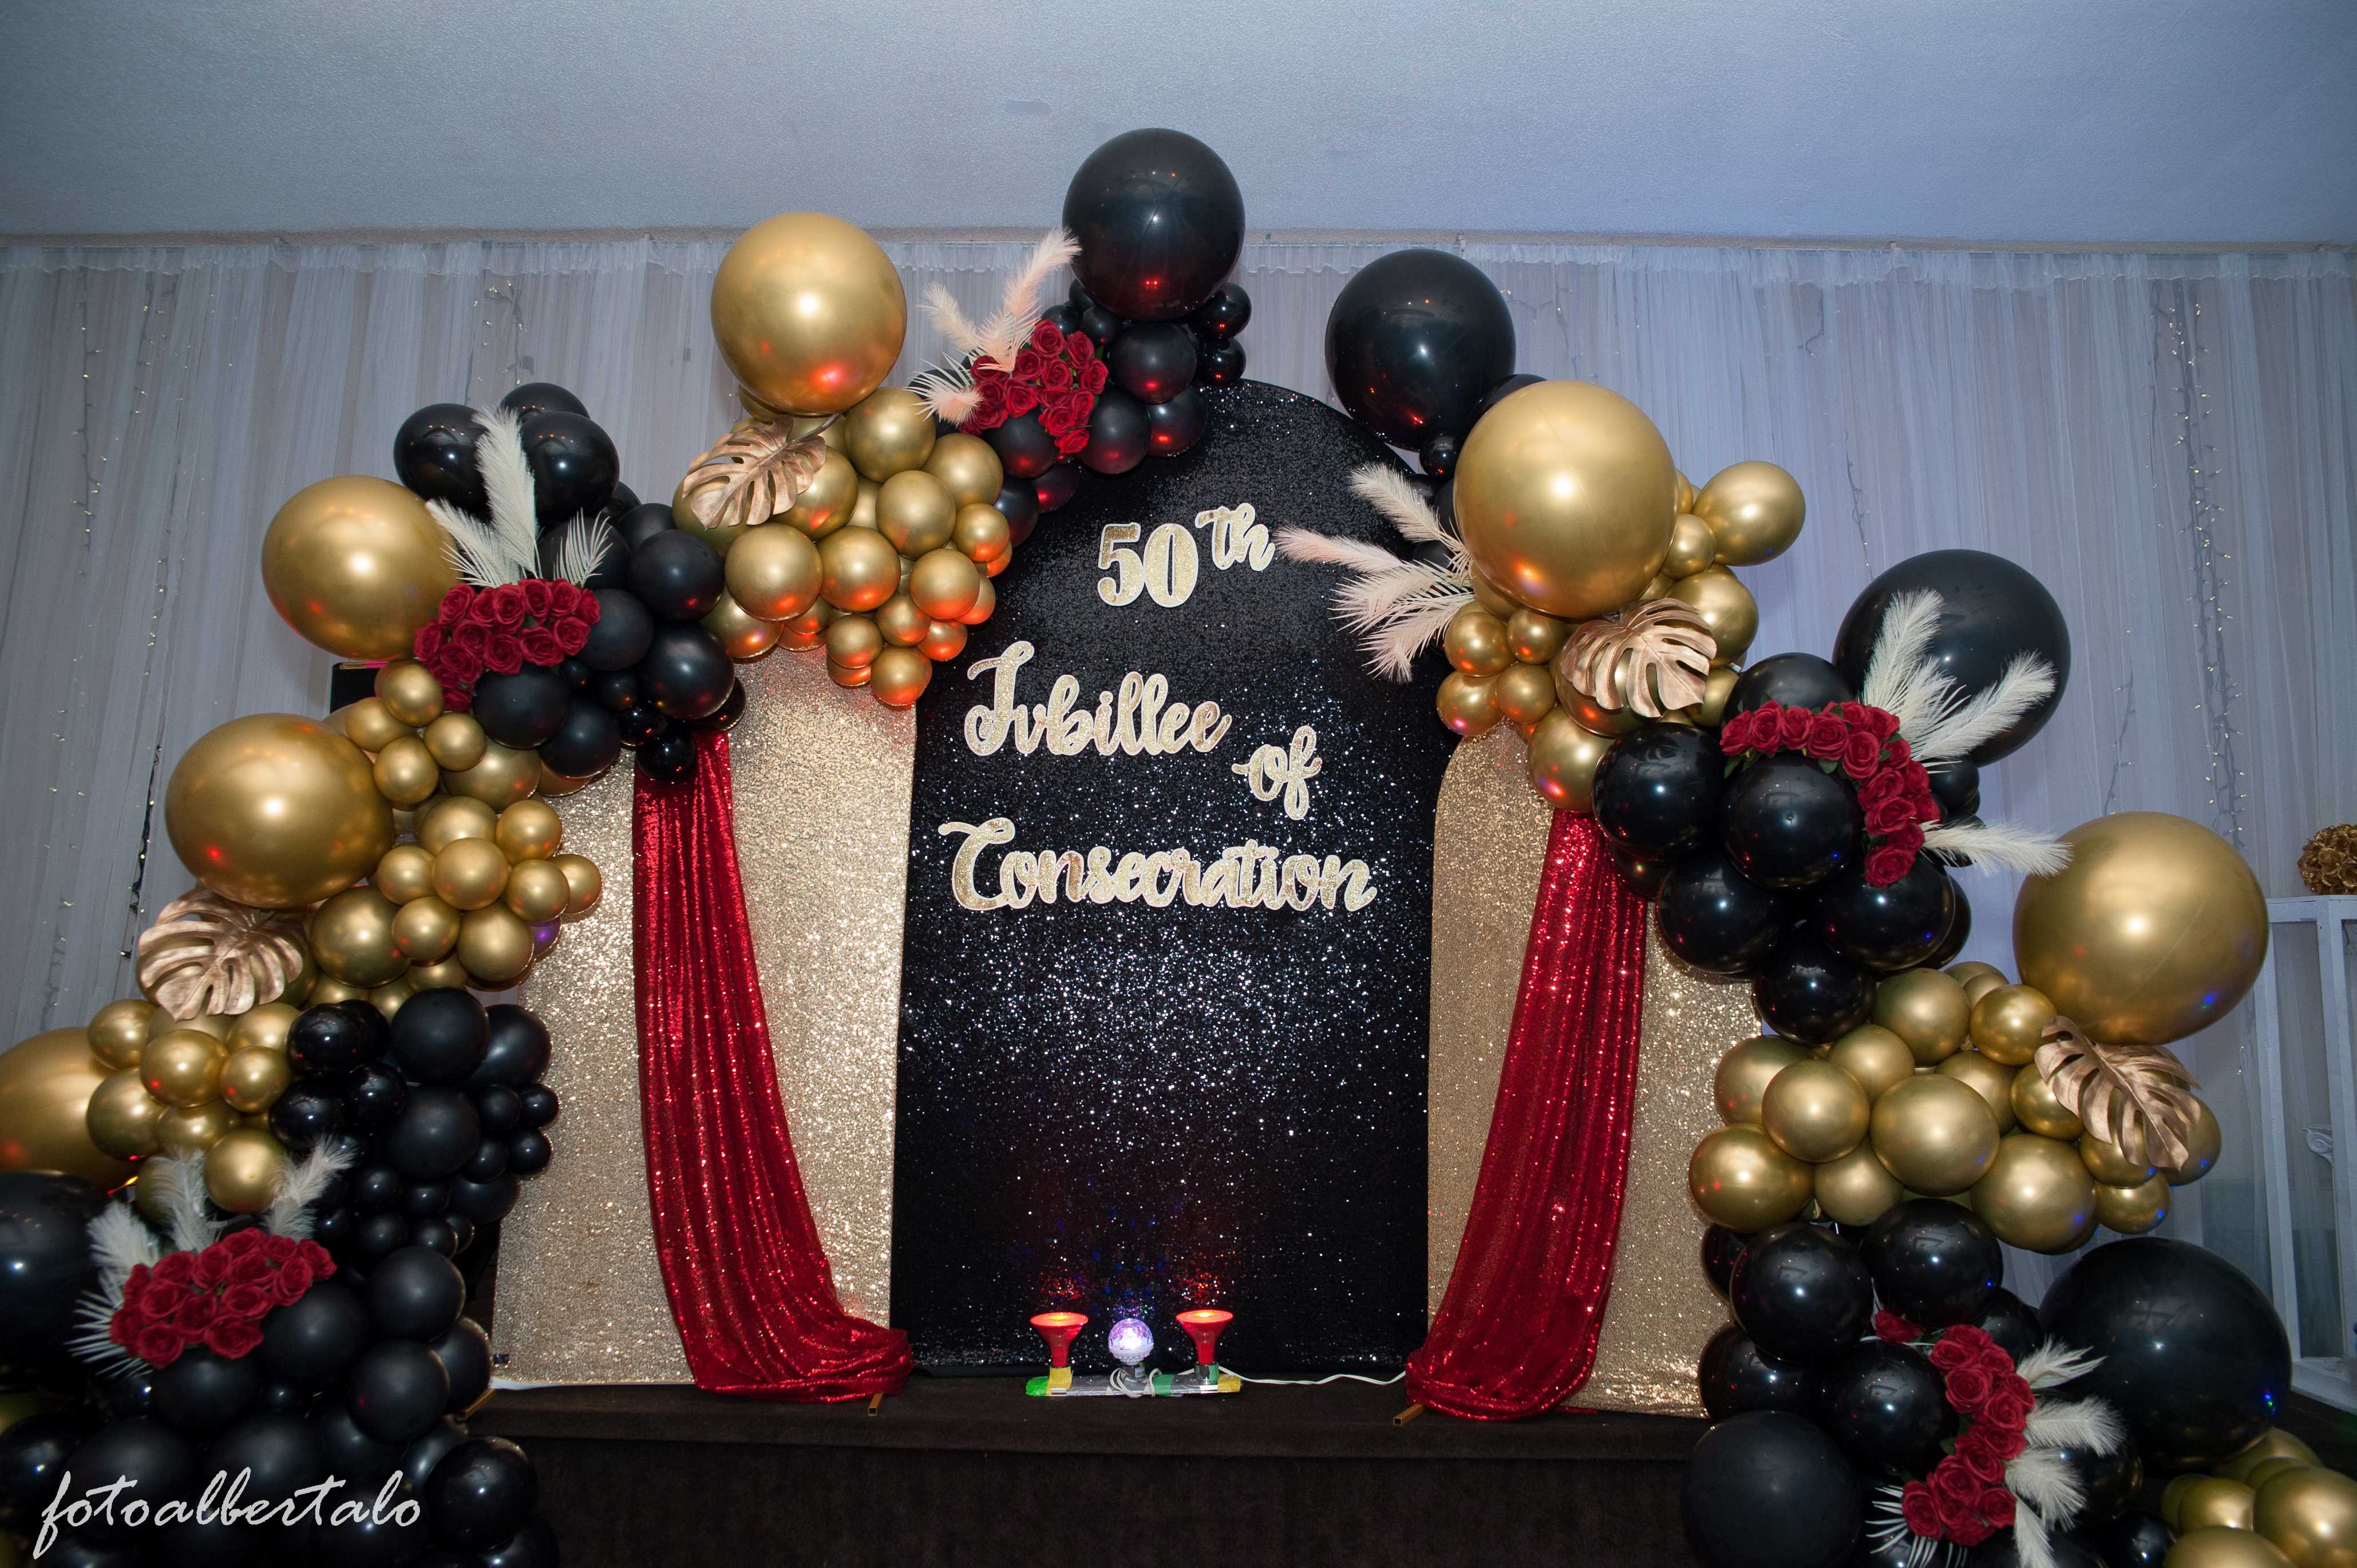 50th Anniversary Jubilee Gala